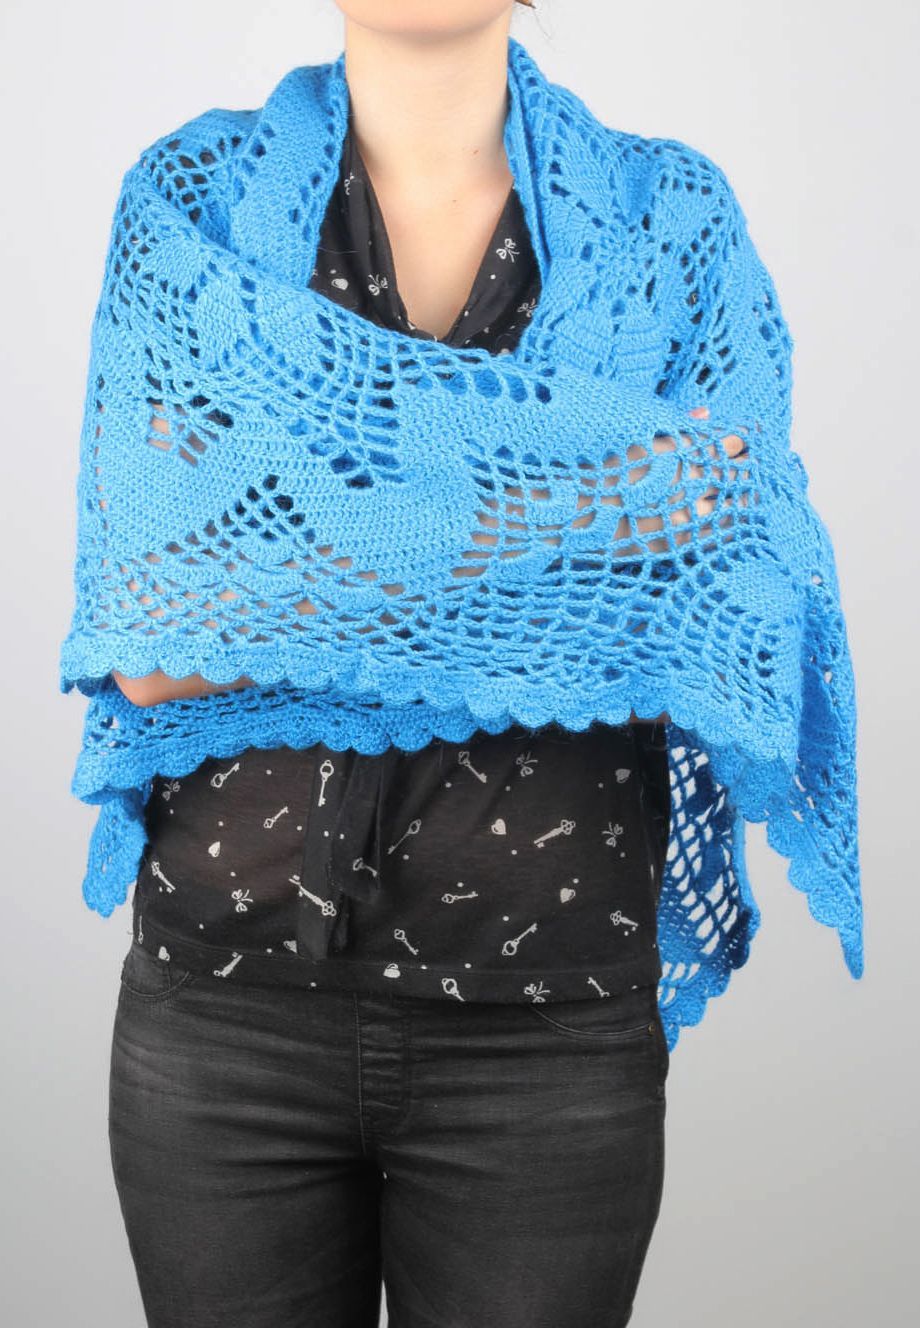 Blue crochet shawl photo 1